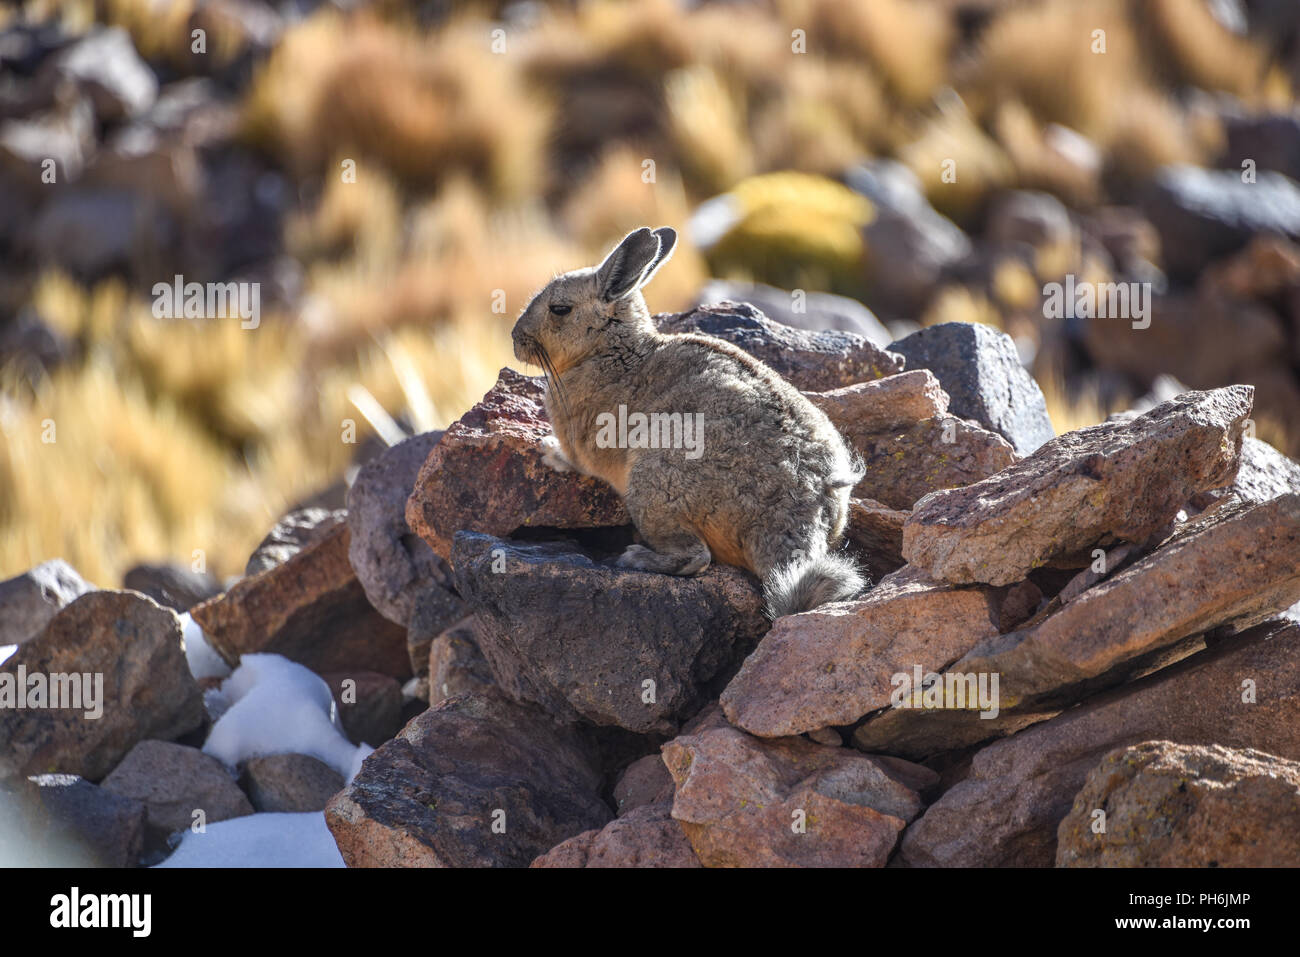 A southern Viscacha sits on rocks in the abandoned mining town of San Antonio de Lipez, Sud Lipez province, Bolivia Stock Photo